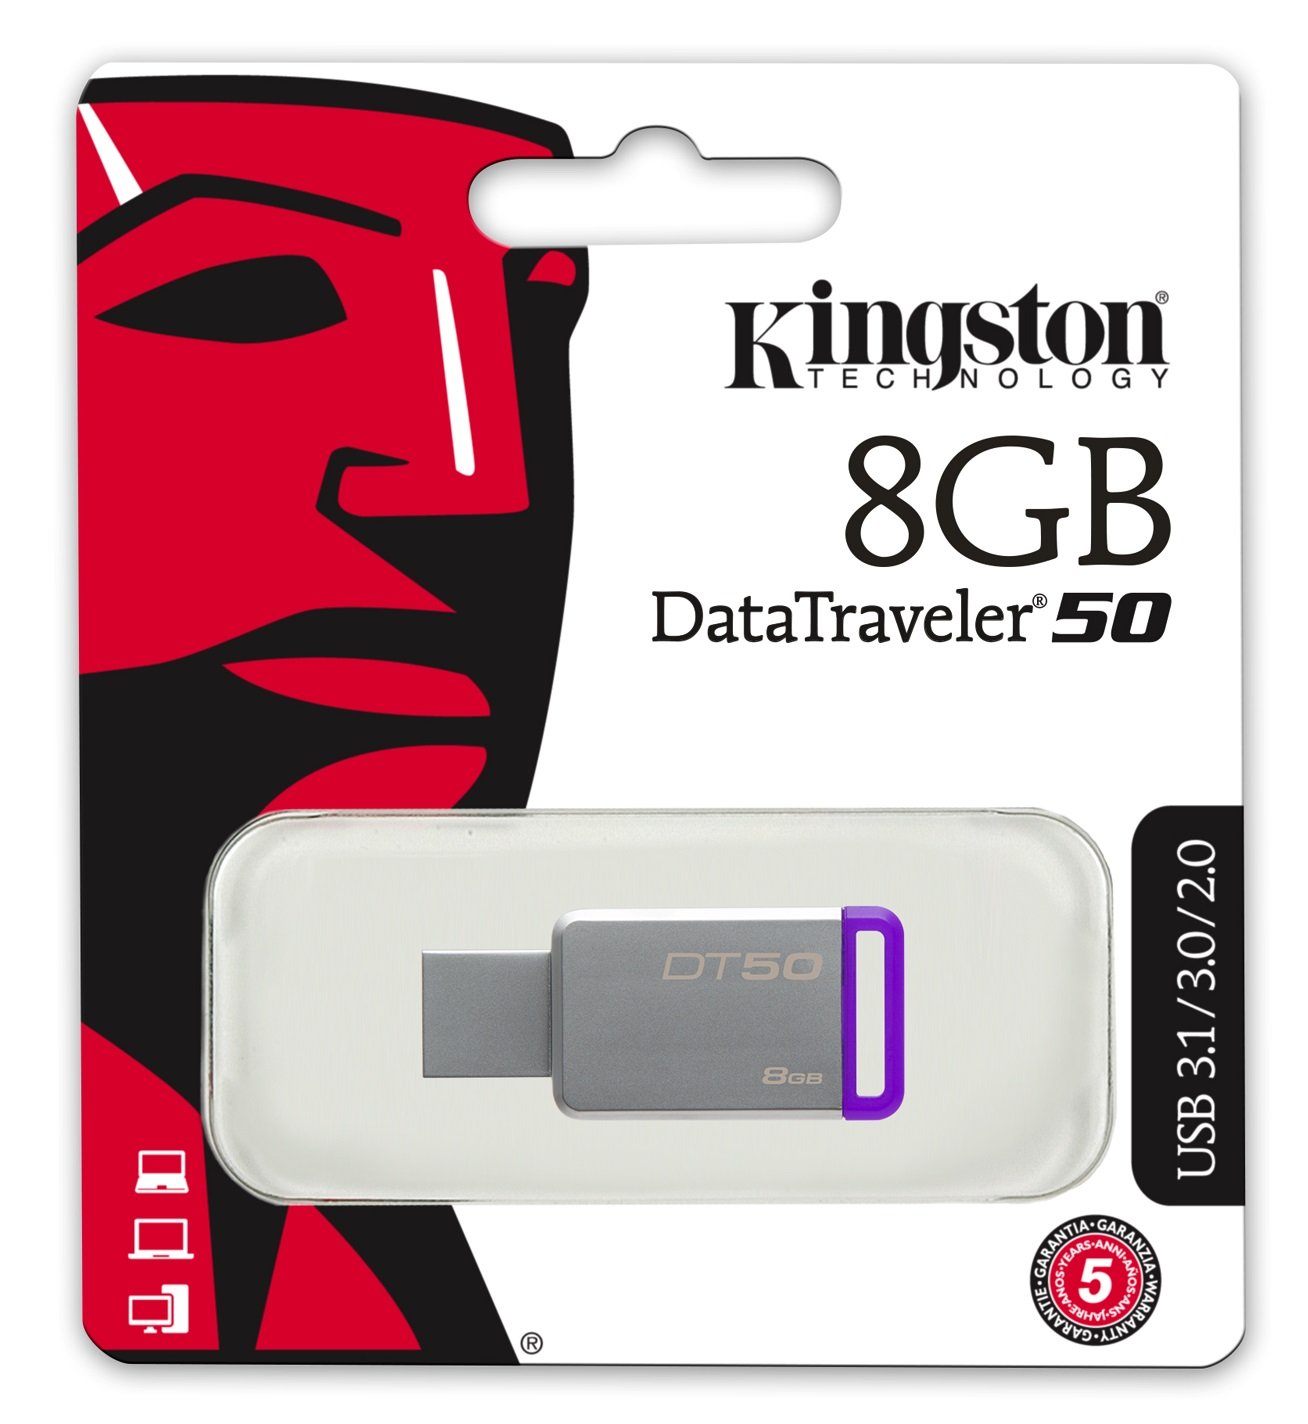 KINGSTON DT50 8GB